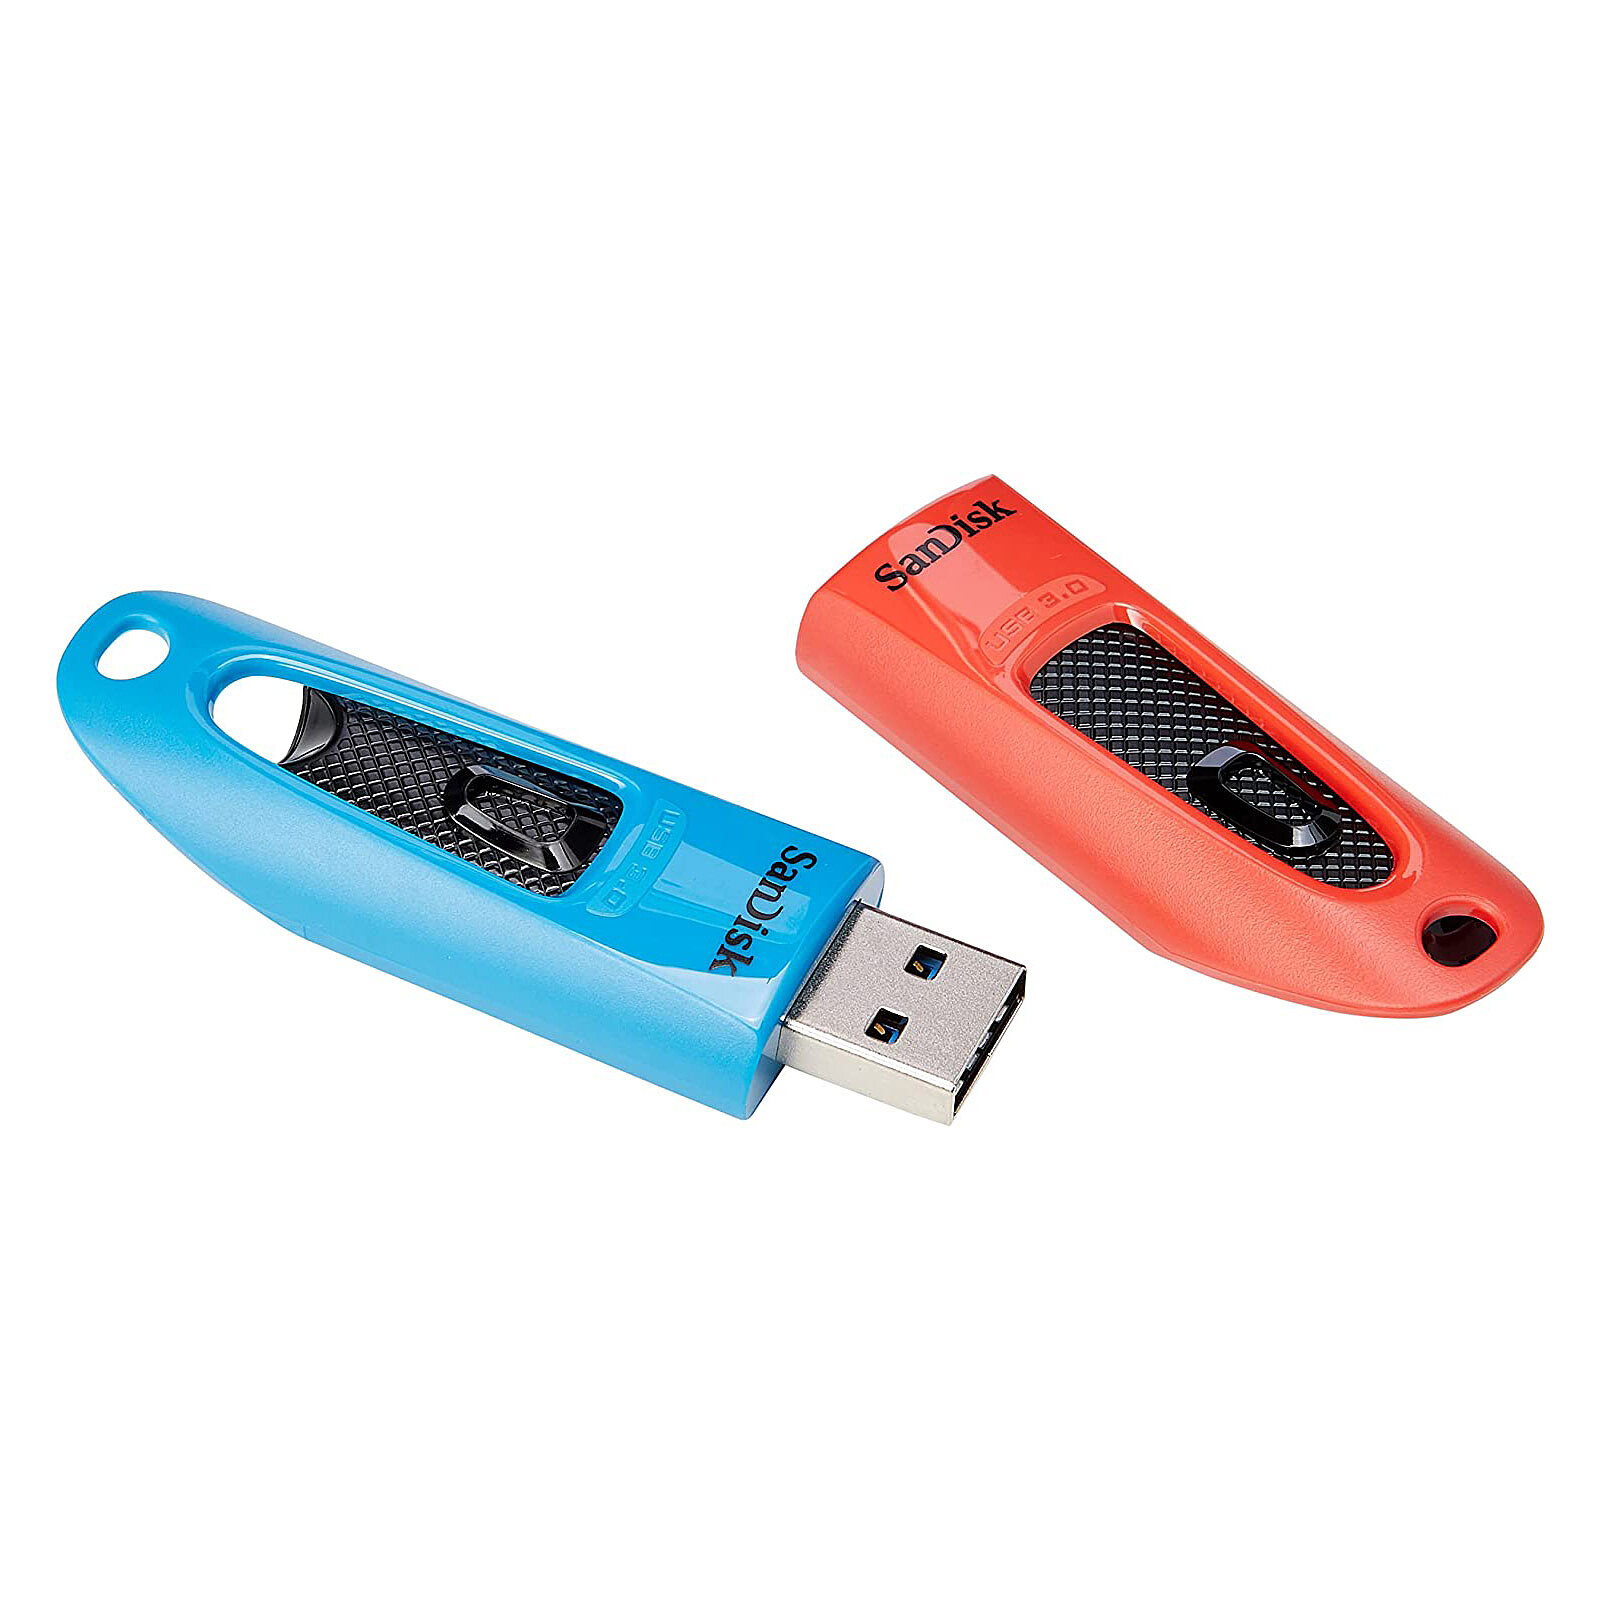 Clé USB SANDISK Ultra 64GB 3.0 Sandisk en multicolore